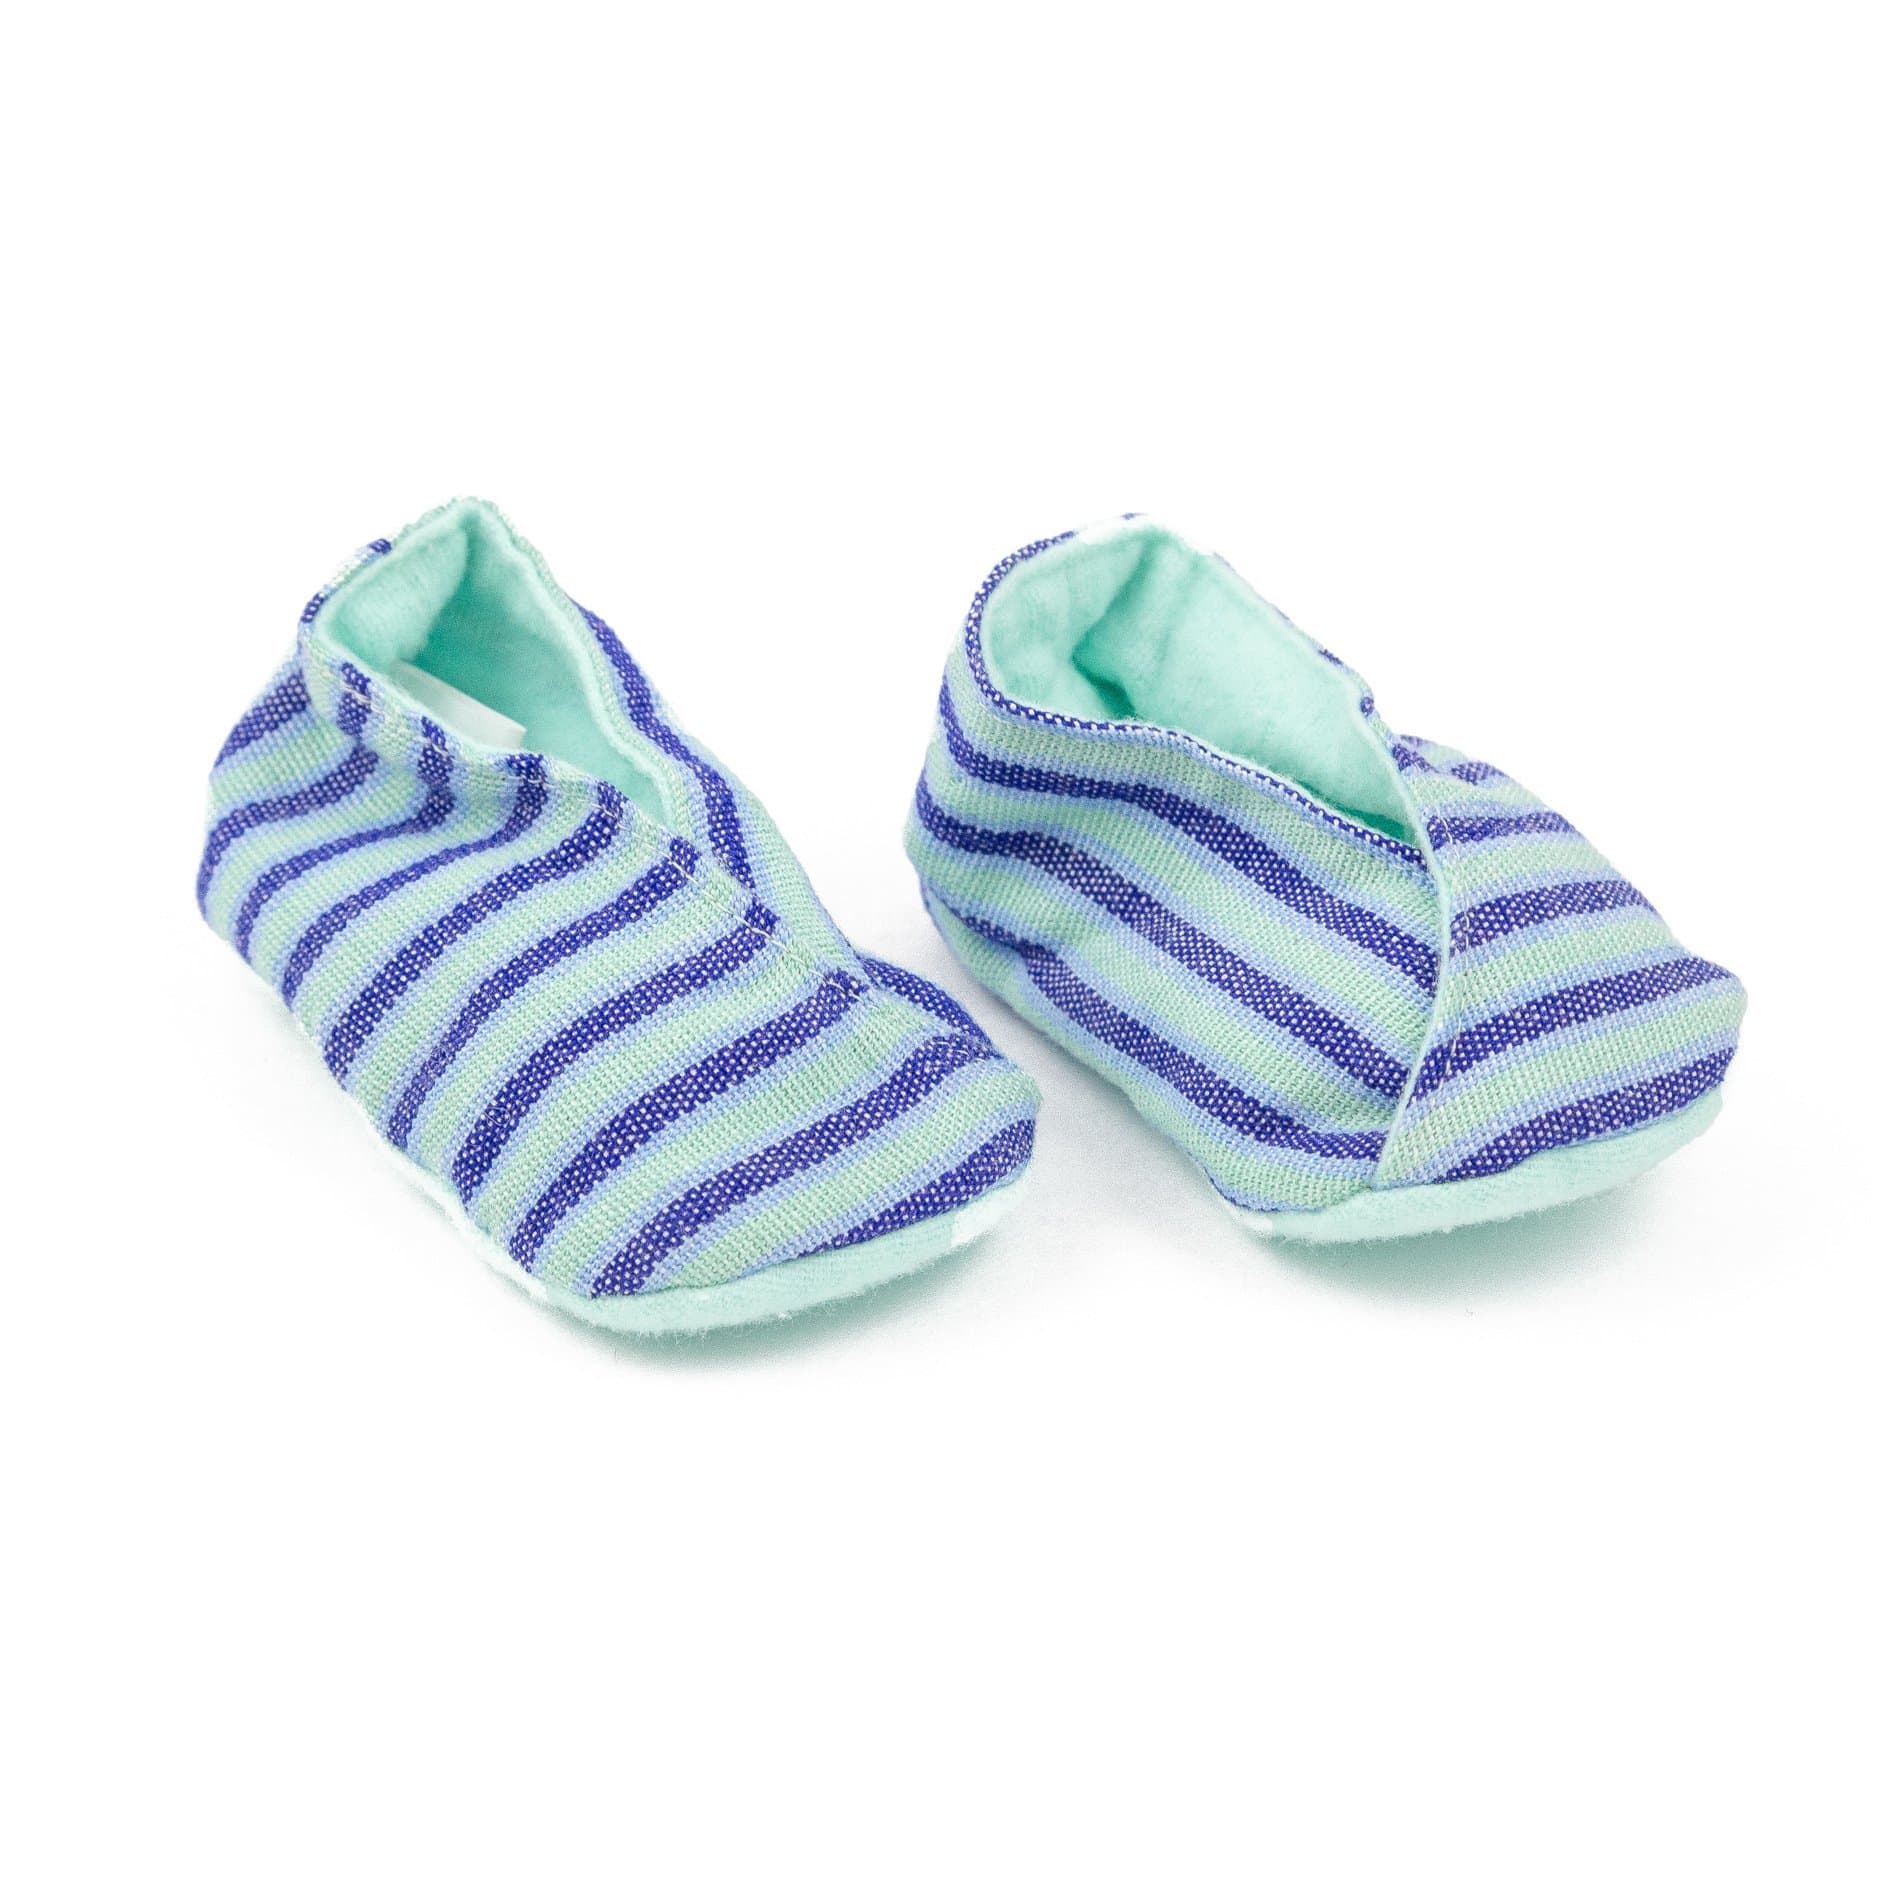 Handwoven Baby Booties UPAVIM Crafts - Free Shipping